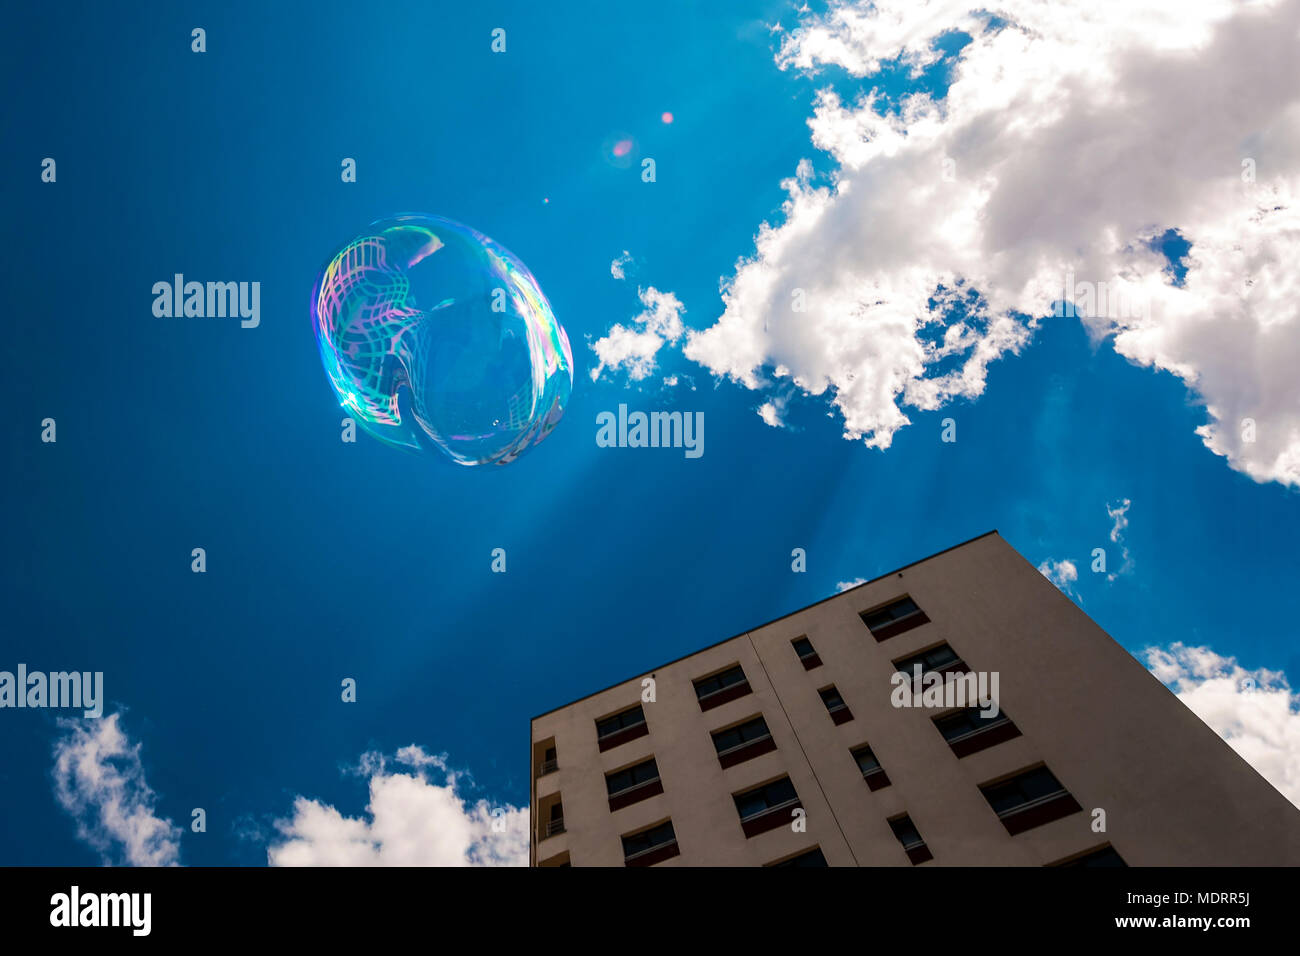 Soap bubble in blue sunny sky, over city blocks. Freedom concept. Stock Photo